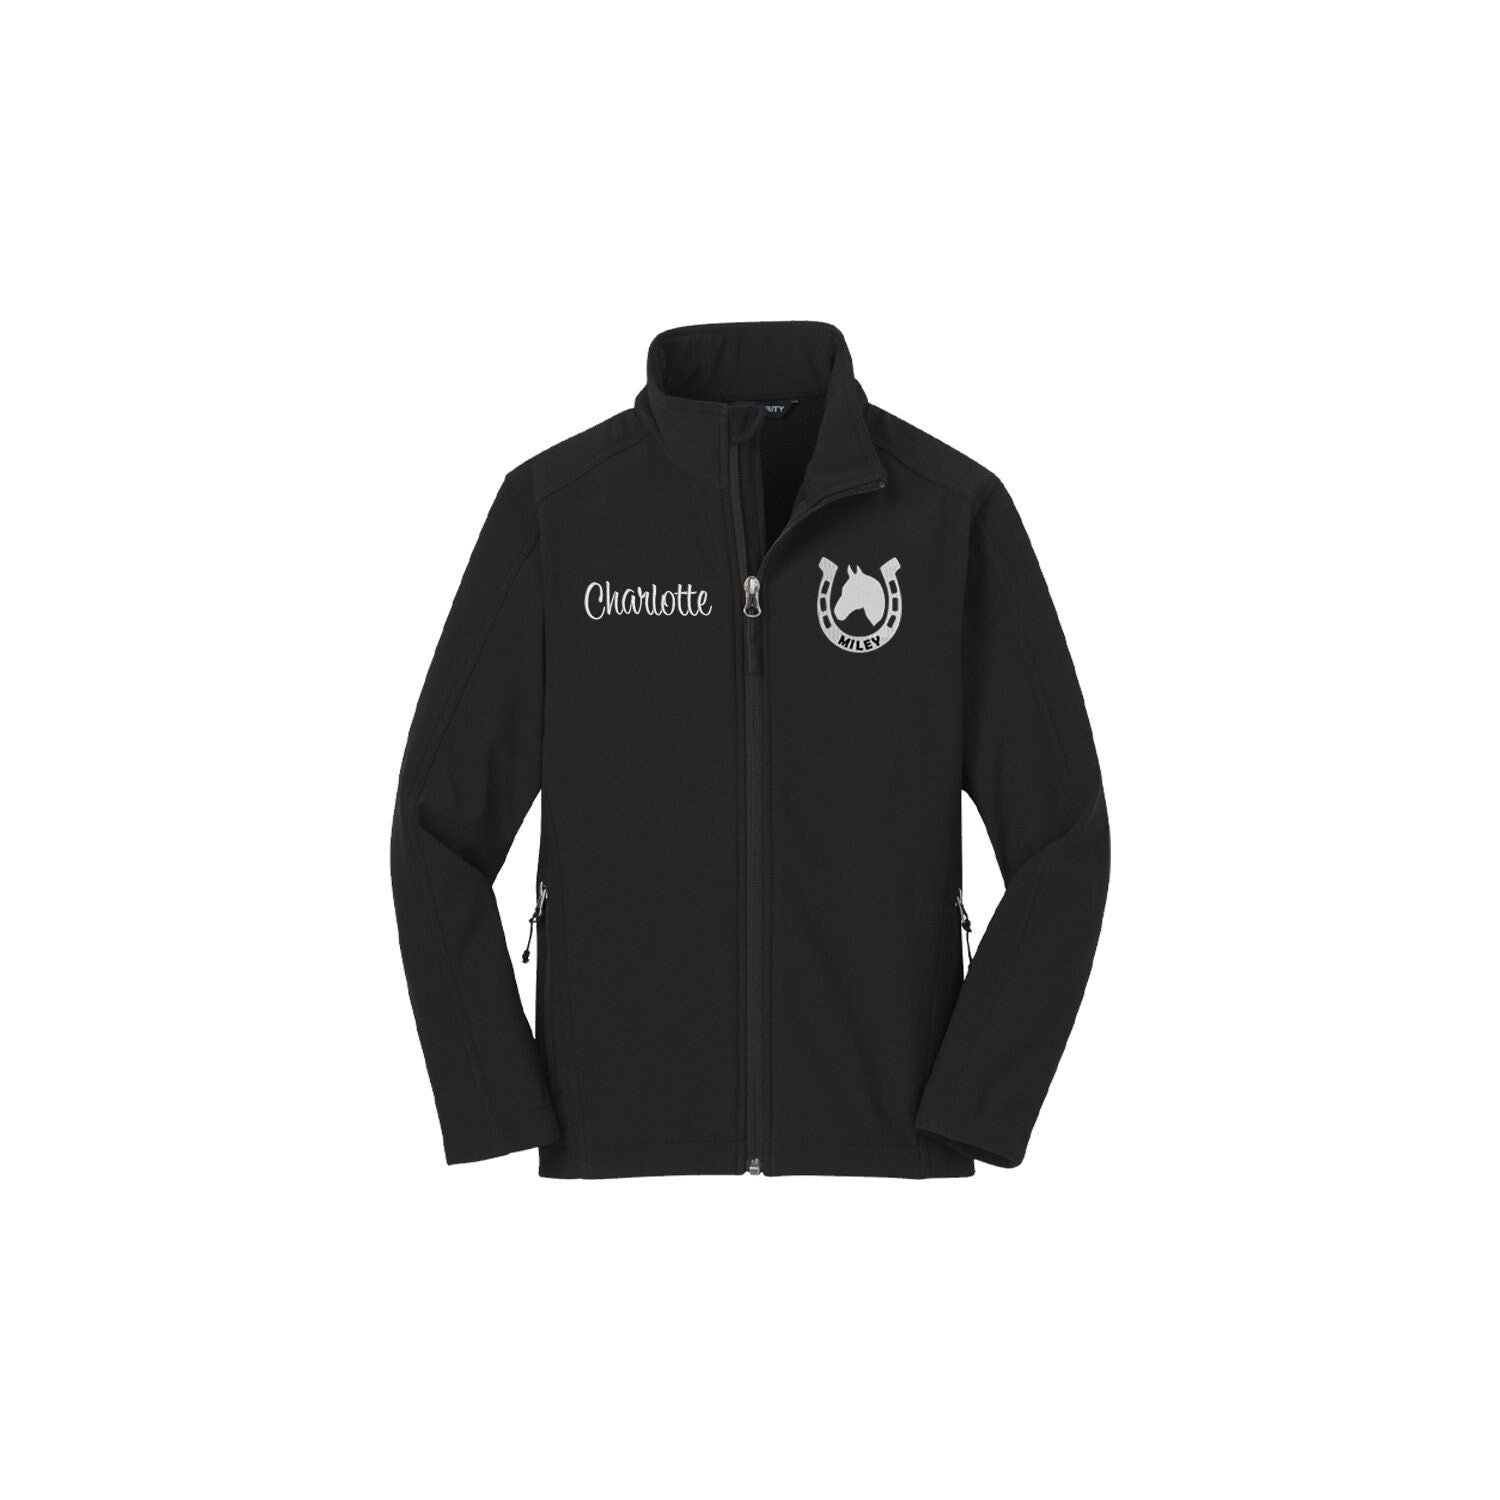 For Your Yard Or Club Equestrain Customised Regatta Professional Junior Jacket